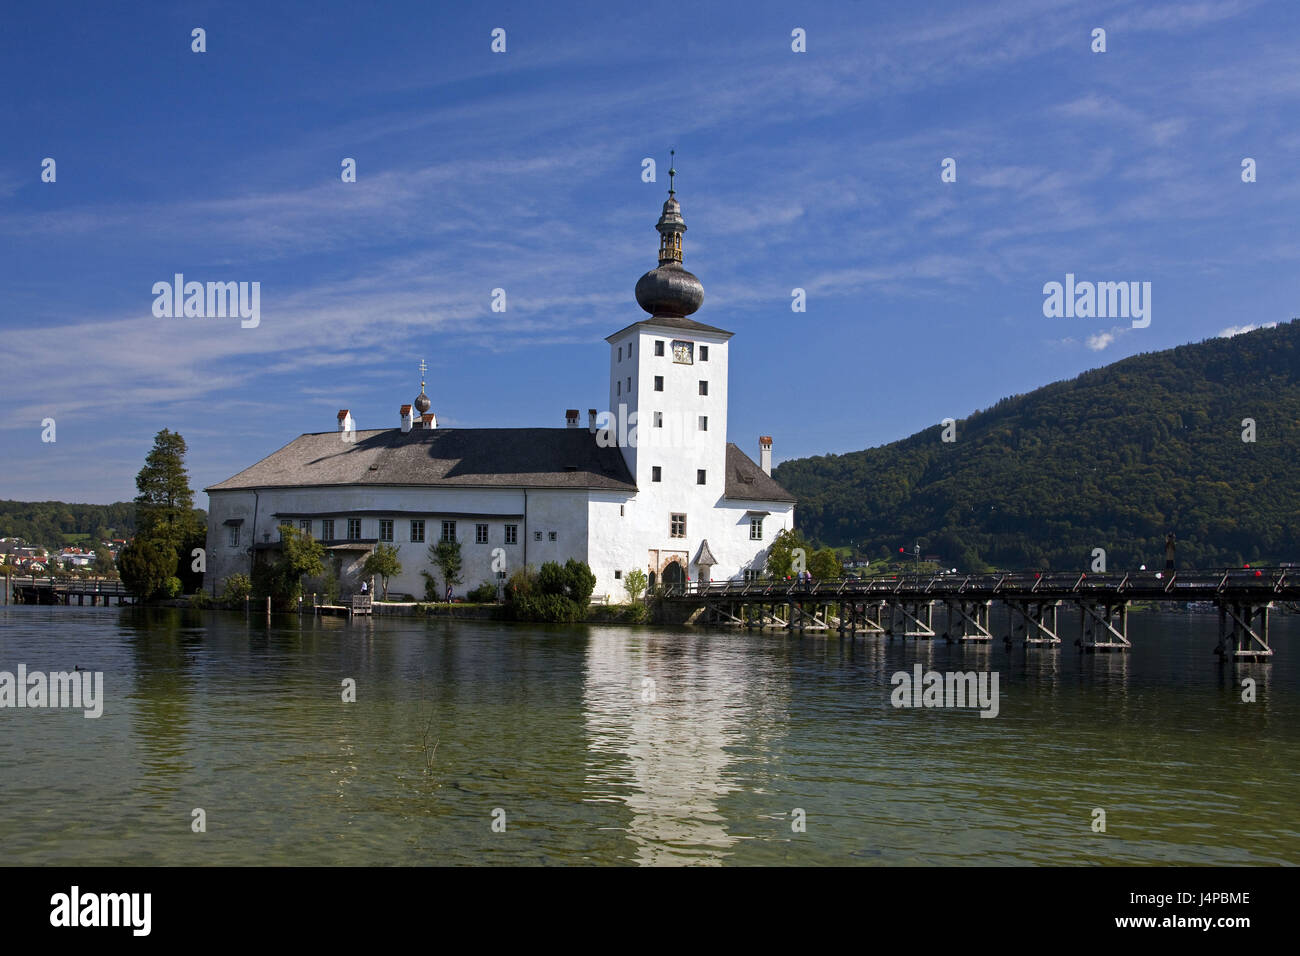 Austria, Upper Austria, Gmunden, Traunsee, bridge, castle Orth, Stock Photo